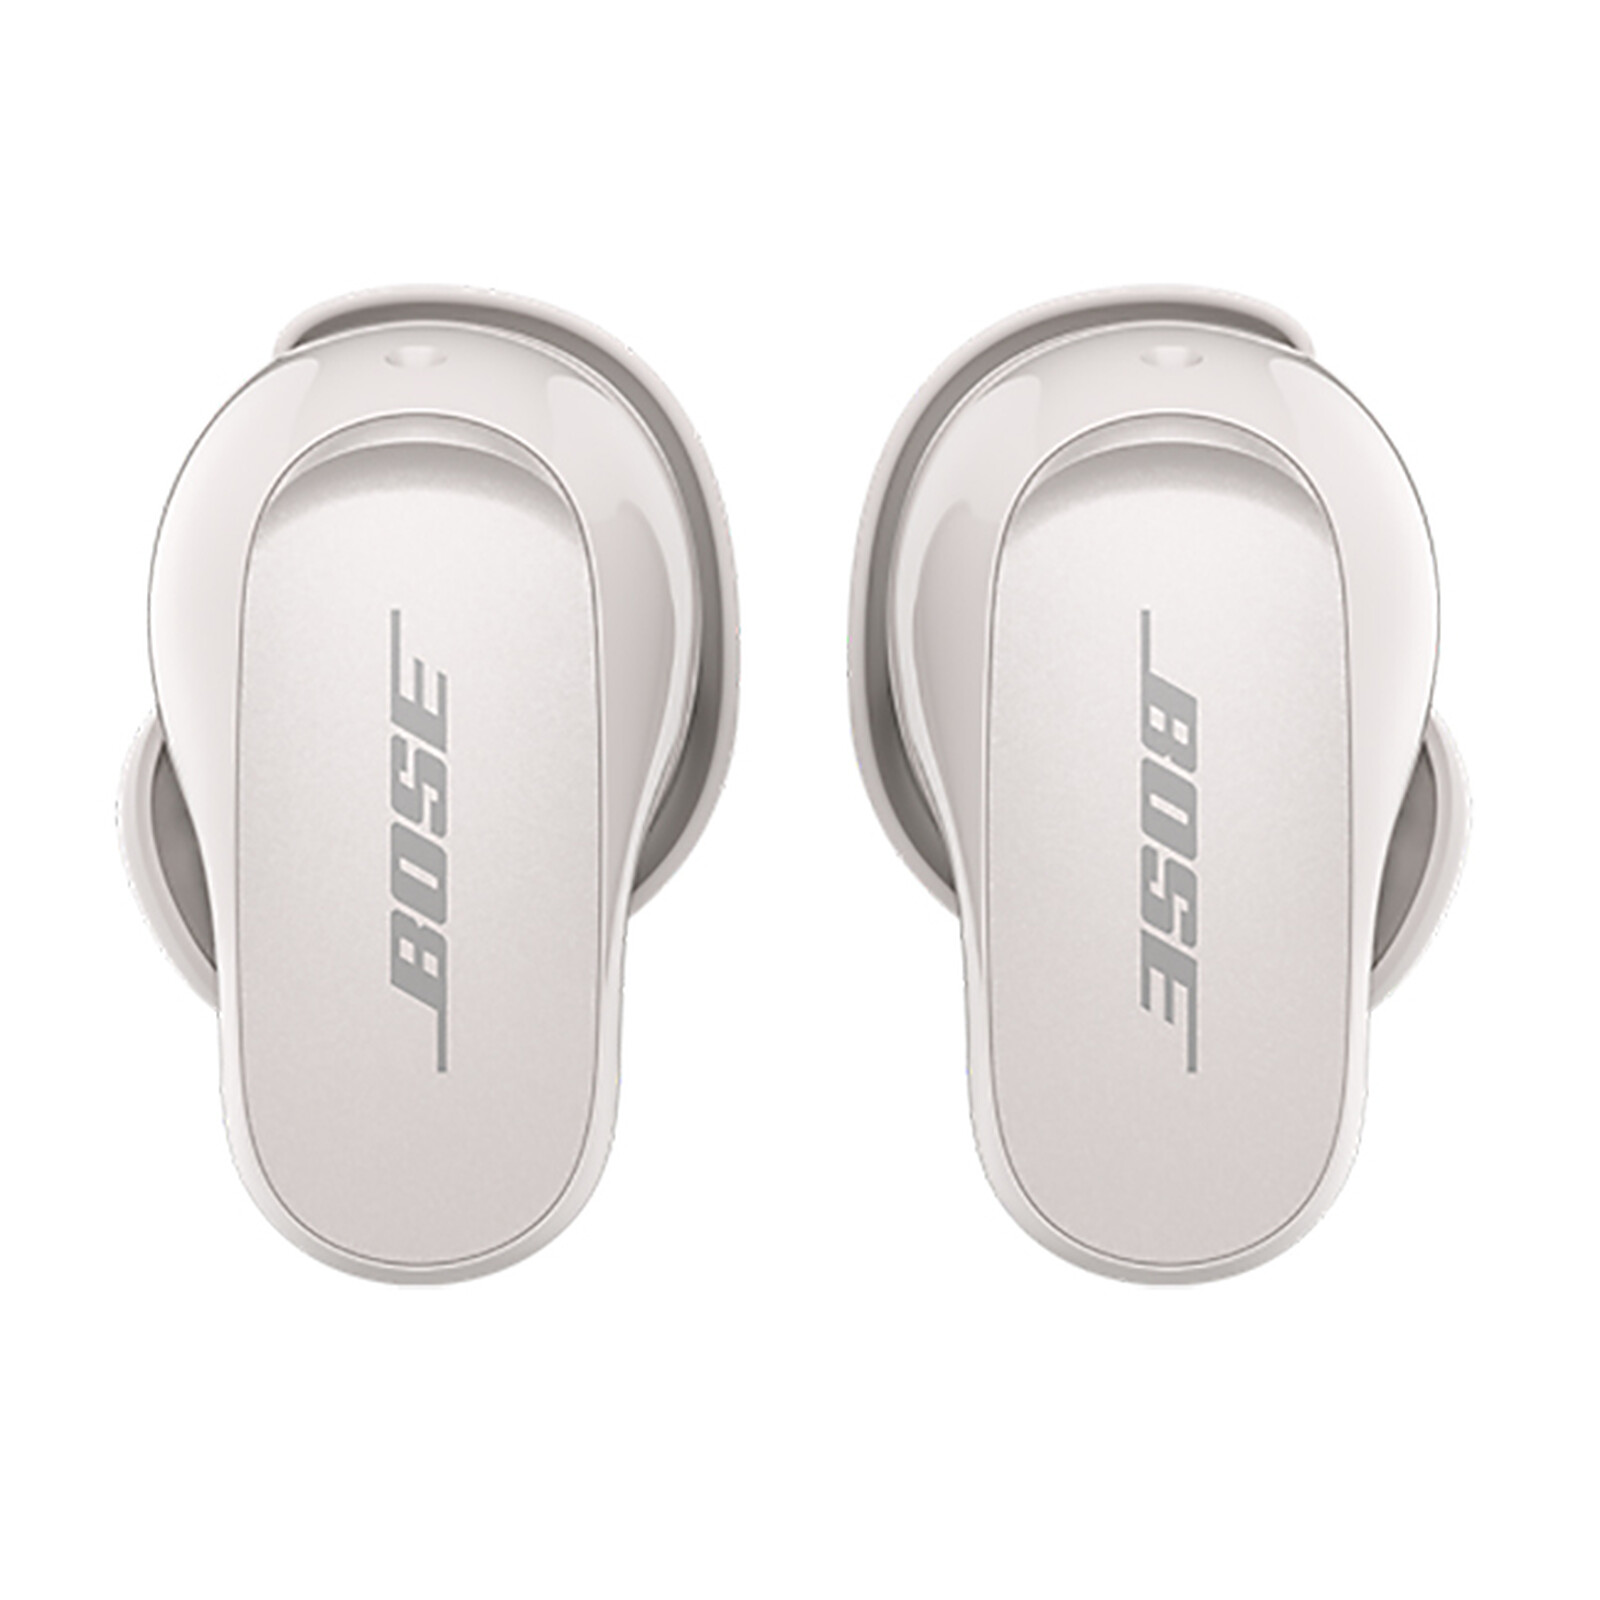 Bose QuietComfort Earbuds II White - Headphones - LDLC 3-year